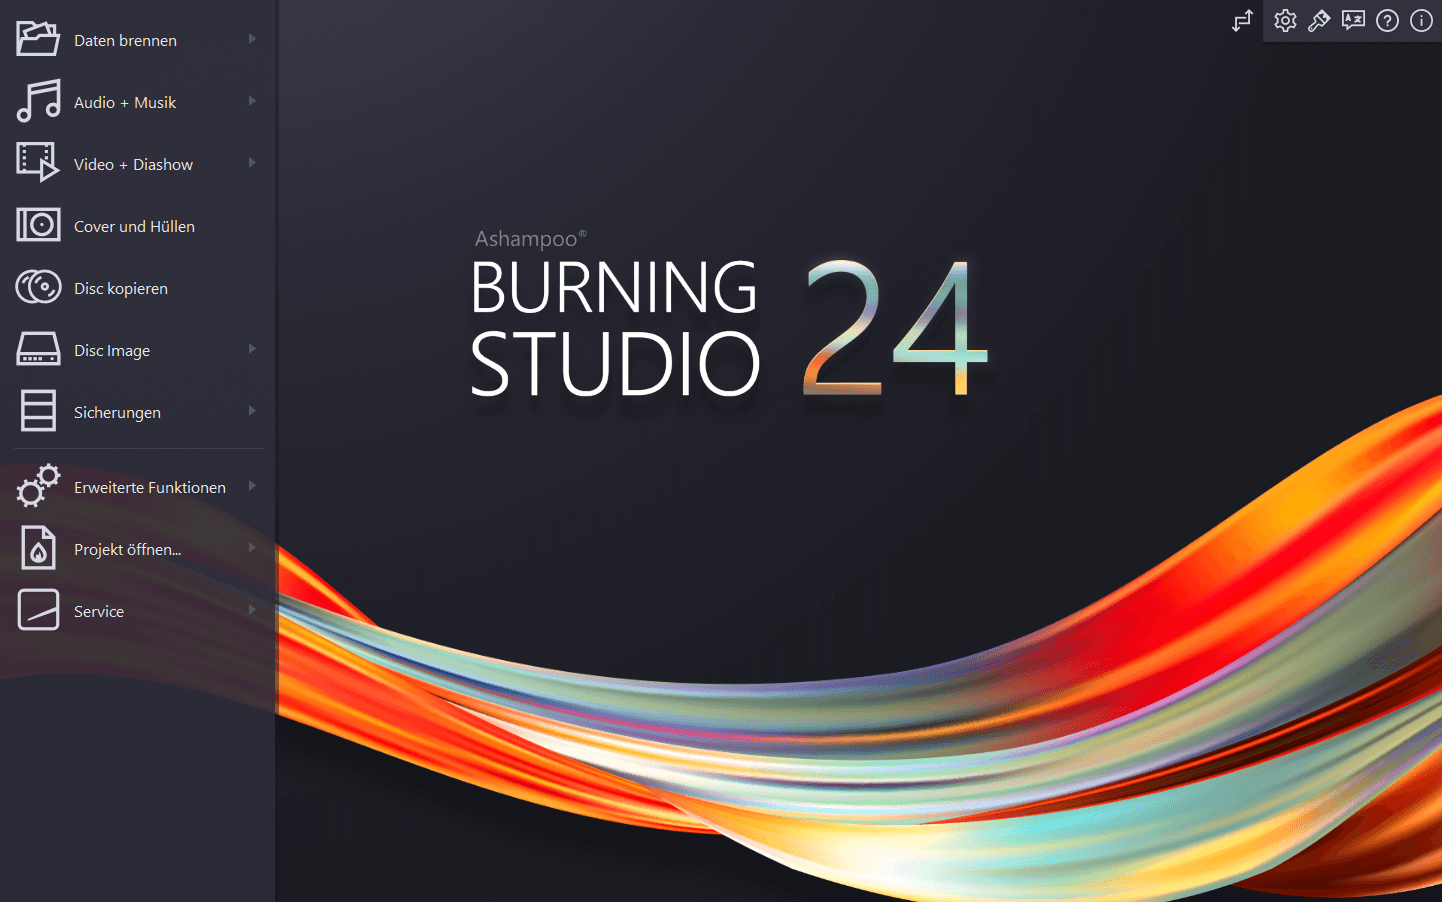 Ashampoo Burning Studio 24 / 1 PC / Dauerlizenz / KEY-Download